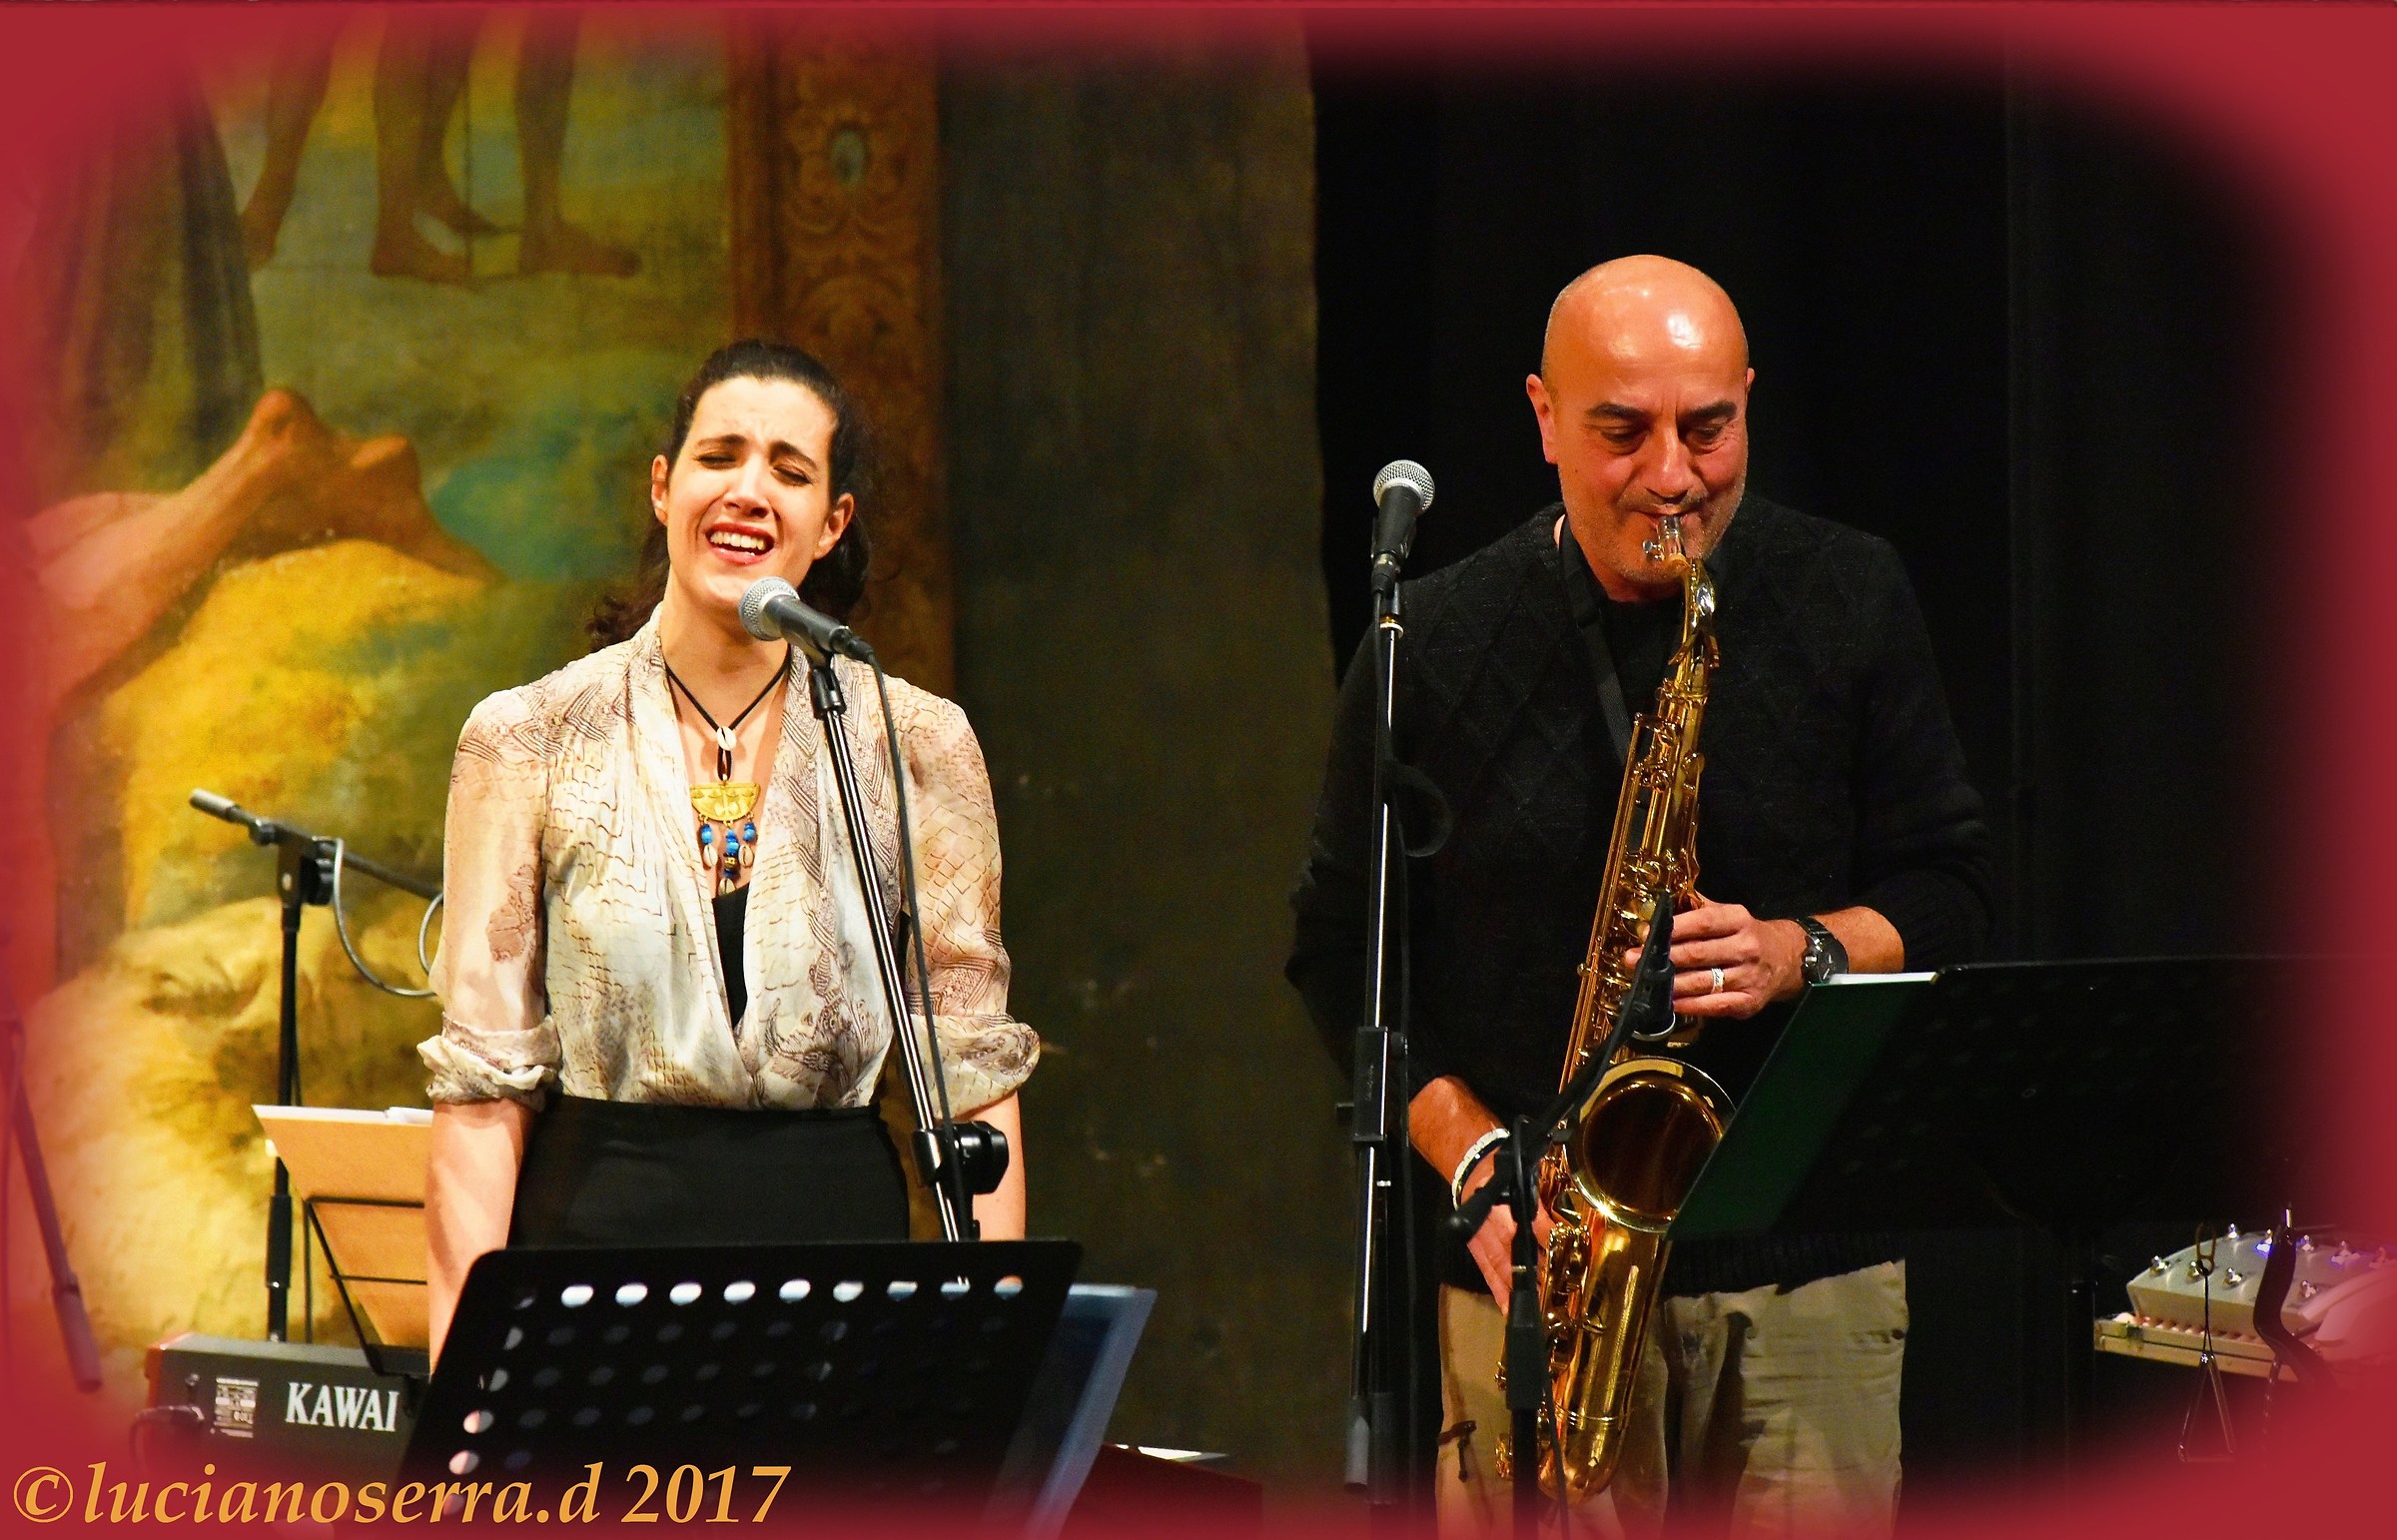 Sara Tinti and Gianluca Masetti - Riveduti & Scorretti...